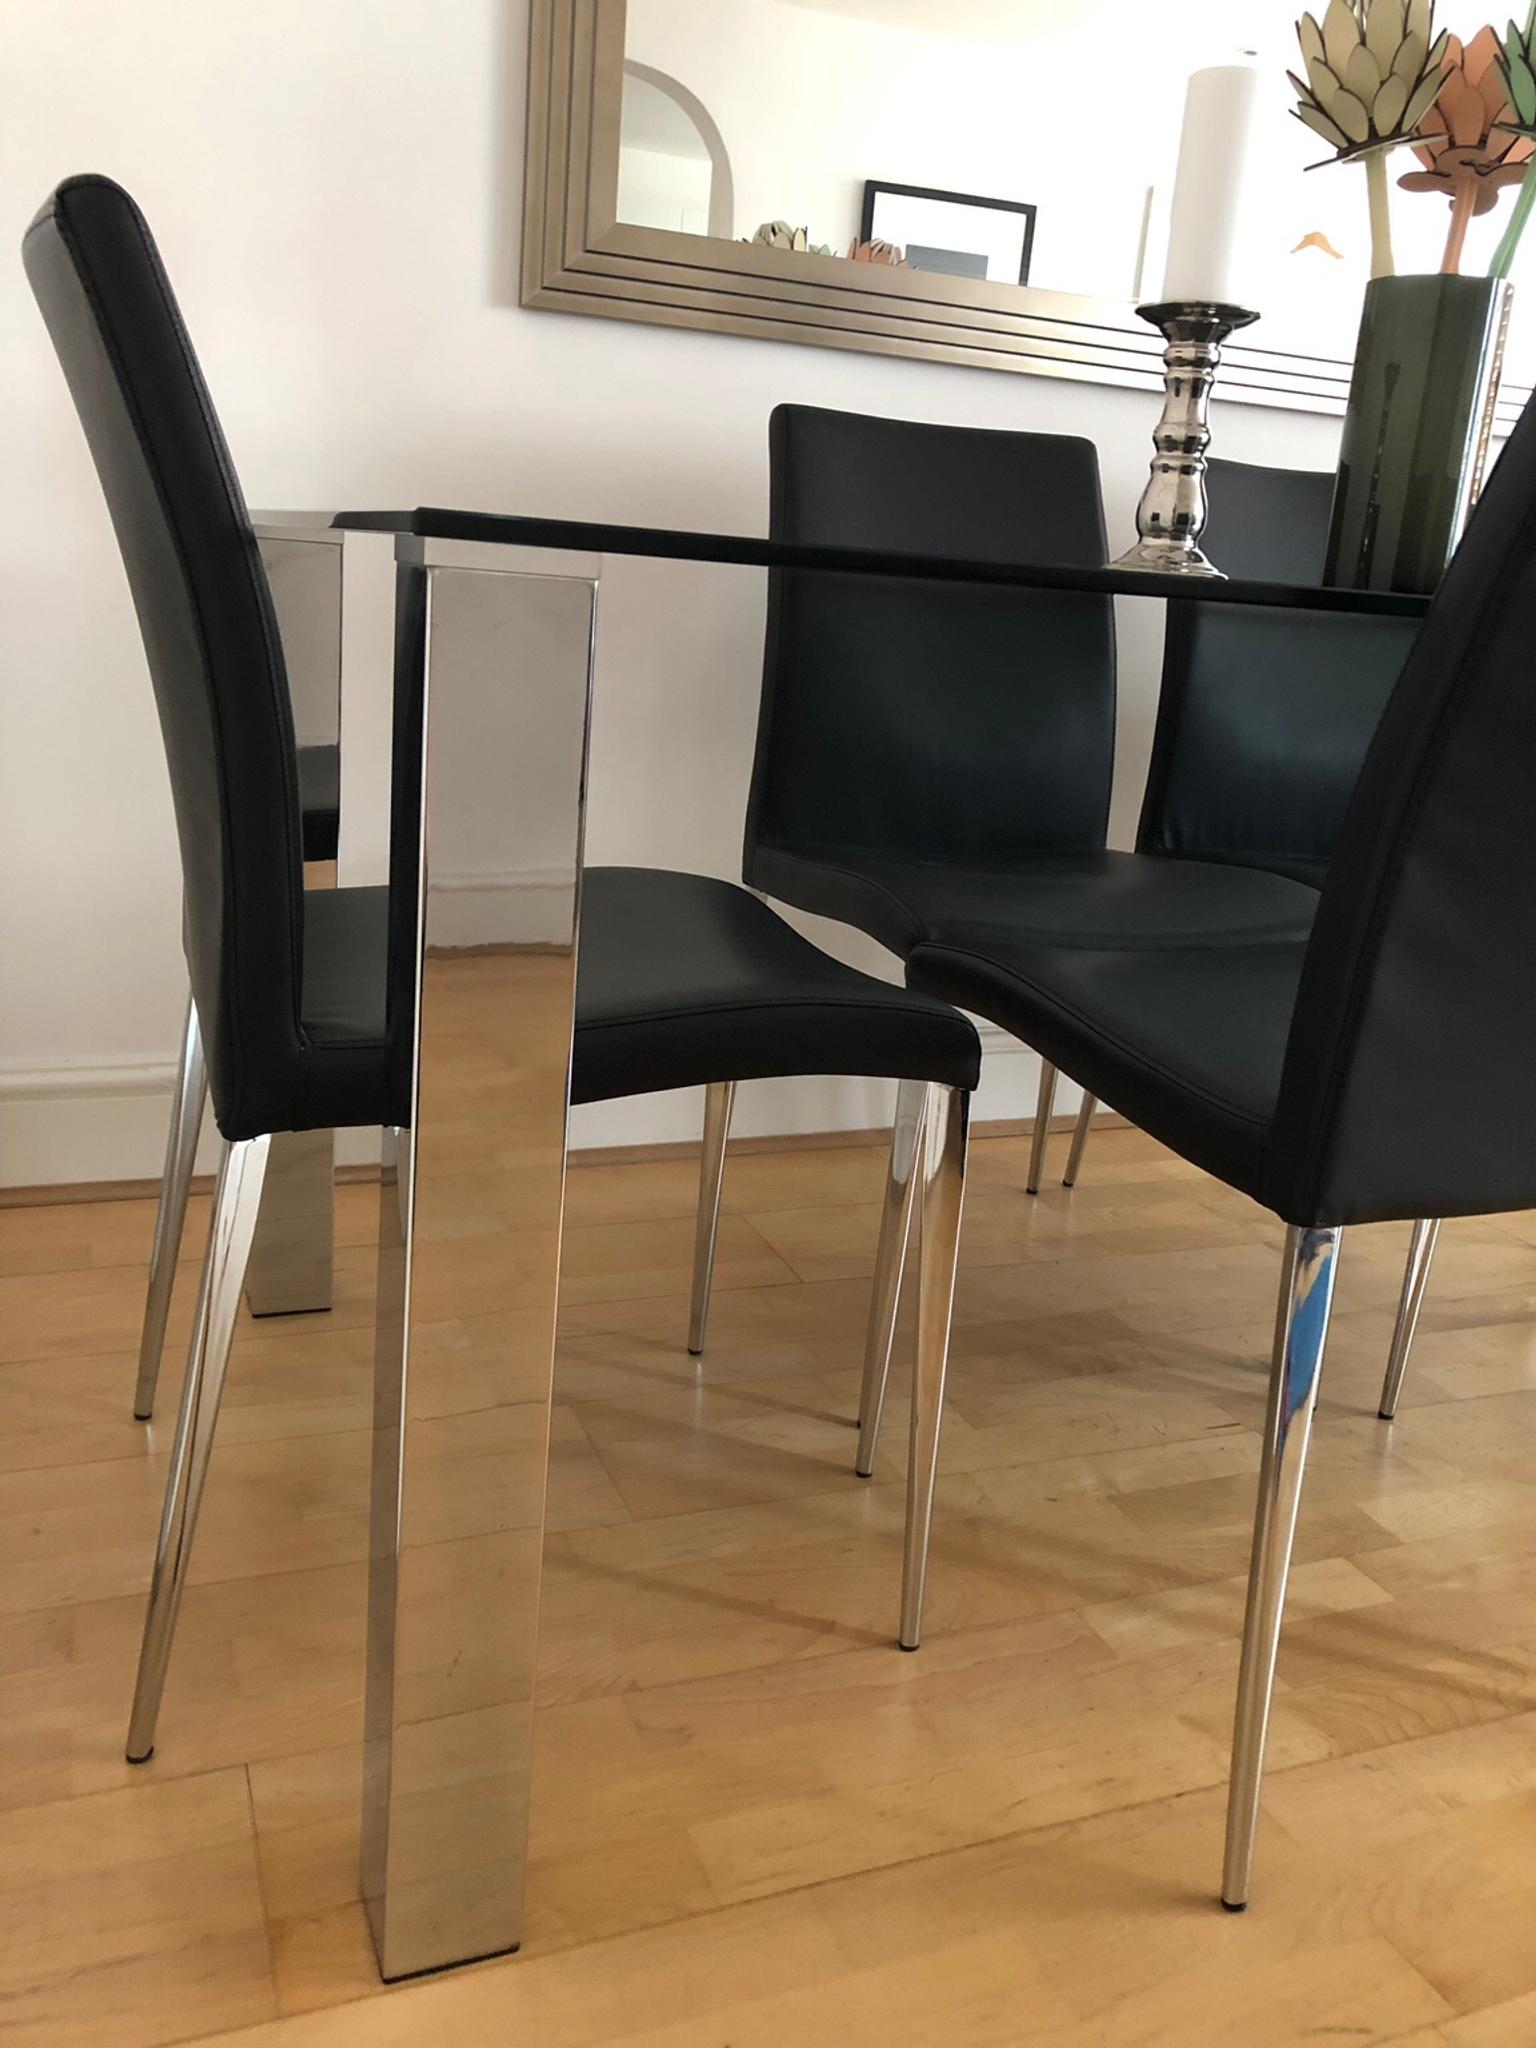 Danetti 6 Seater Glass Dining Table Chairs In Nw6 Camden Fur 500 00 Zum Verkauf Shpock De